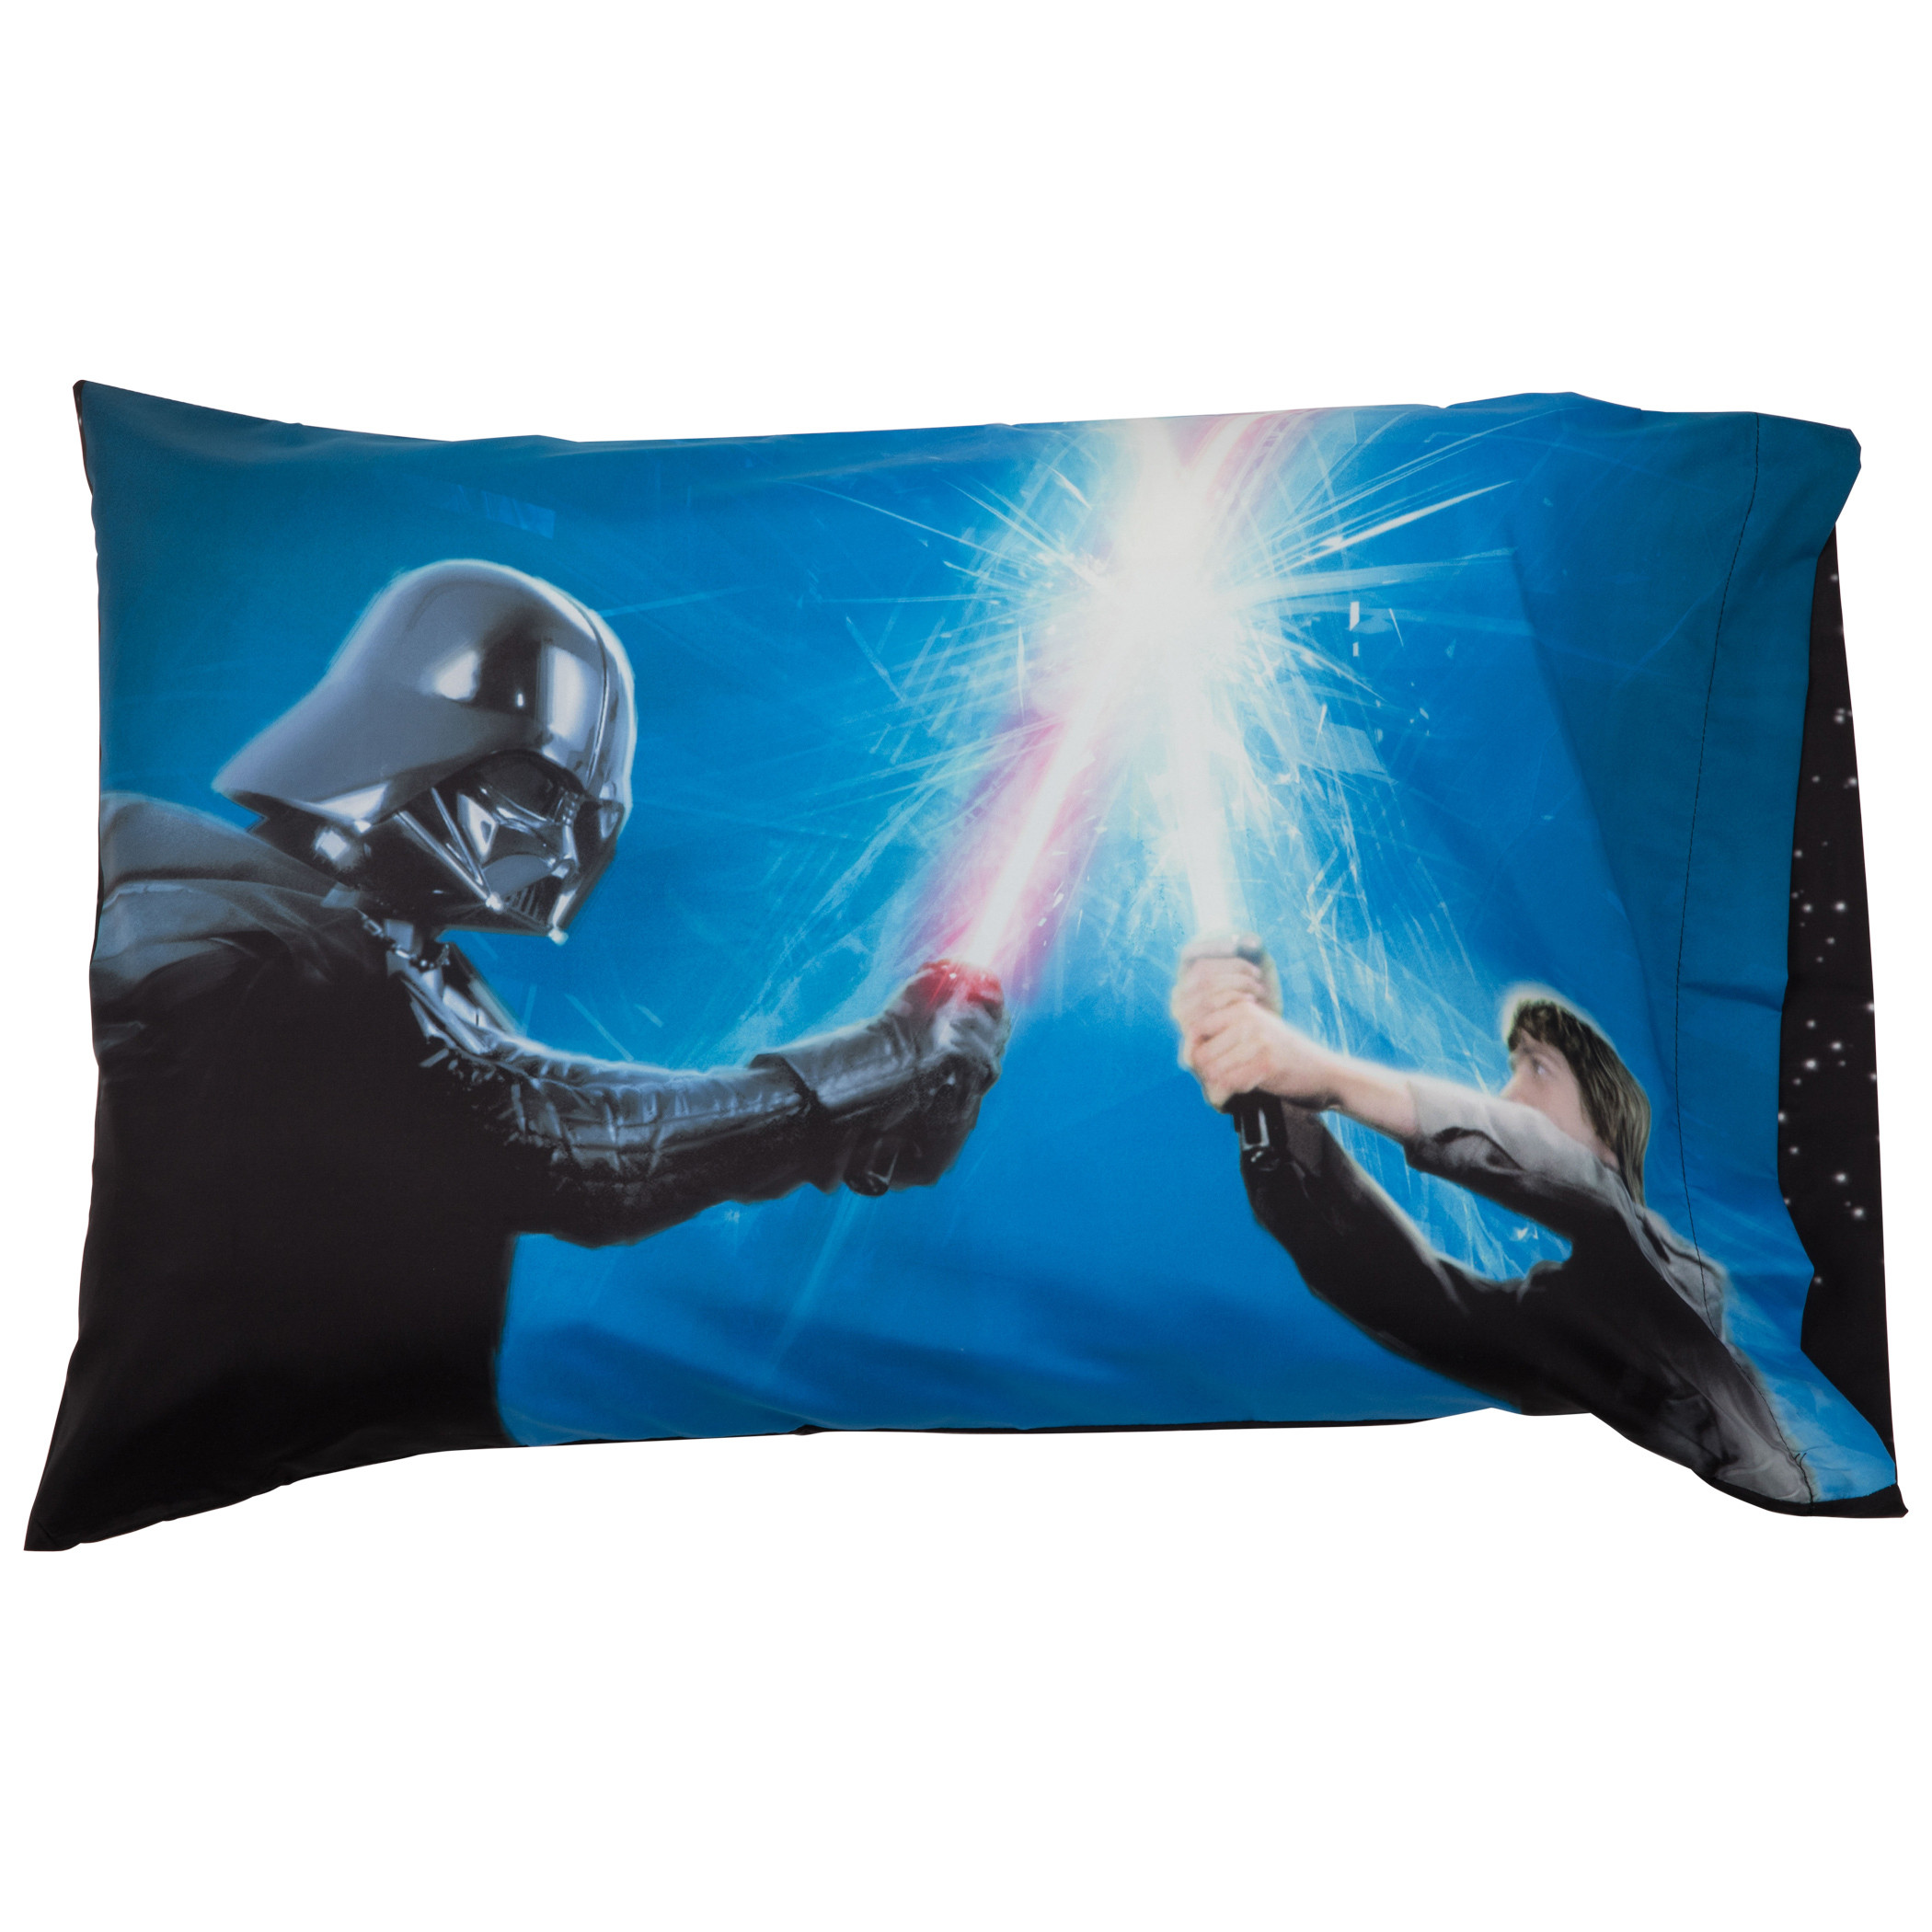 Star Wars In a Galaxy Far Far Away Double-Sided 1-Pack Pillowcase